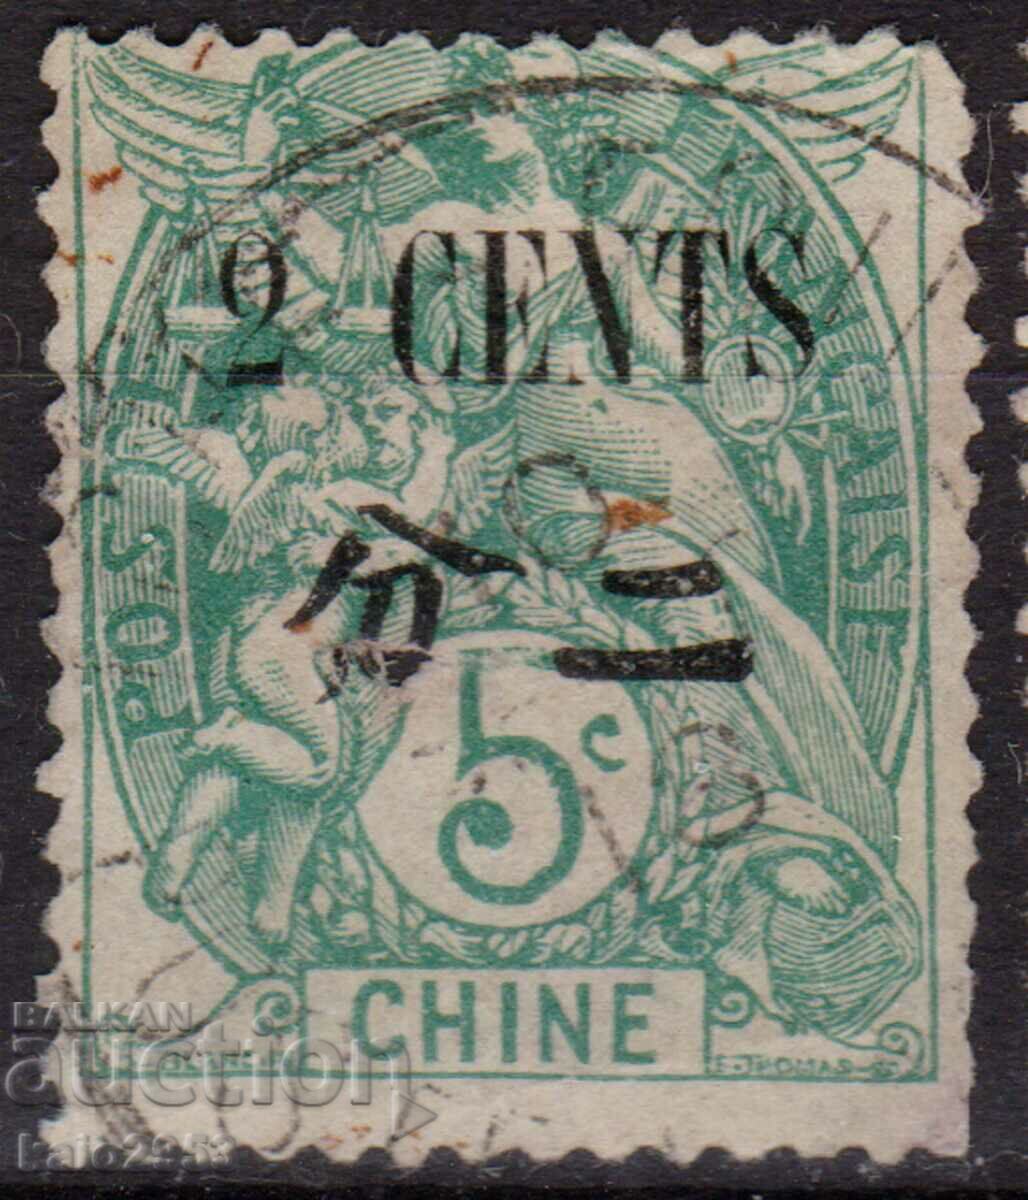 Franța/Poștă în China-1905-Alegory Poșta pentru Canton, timbru poștal